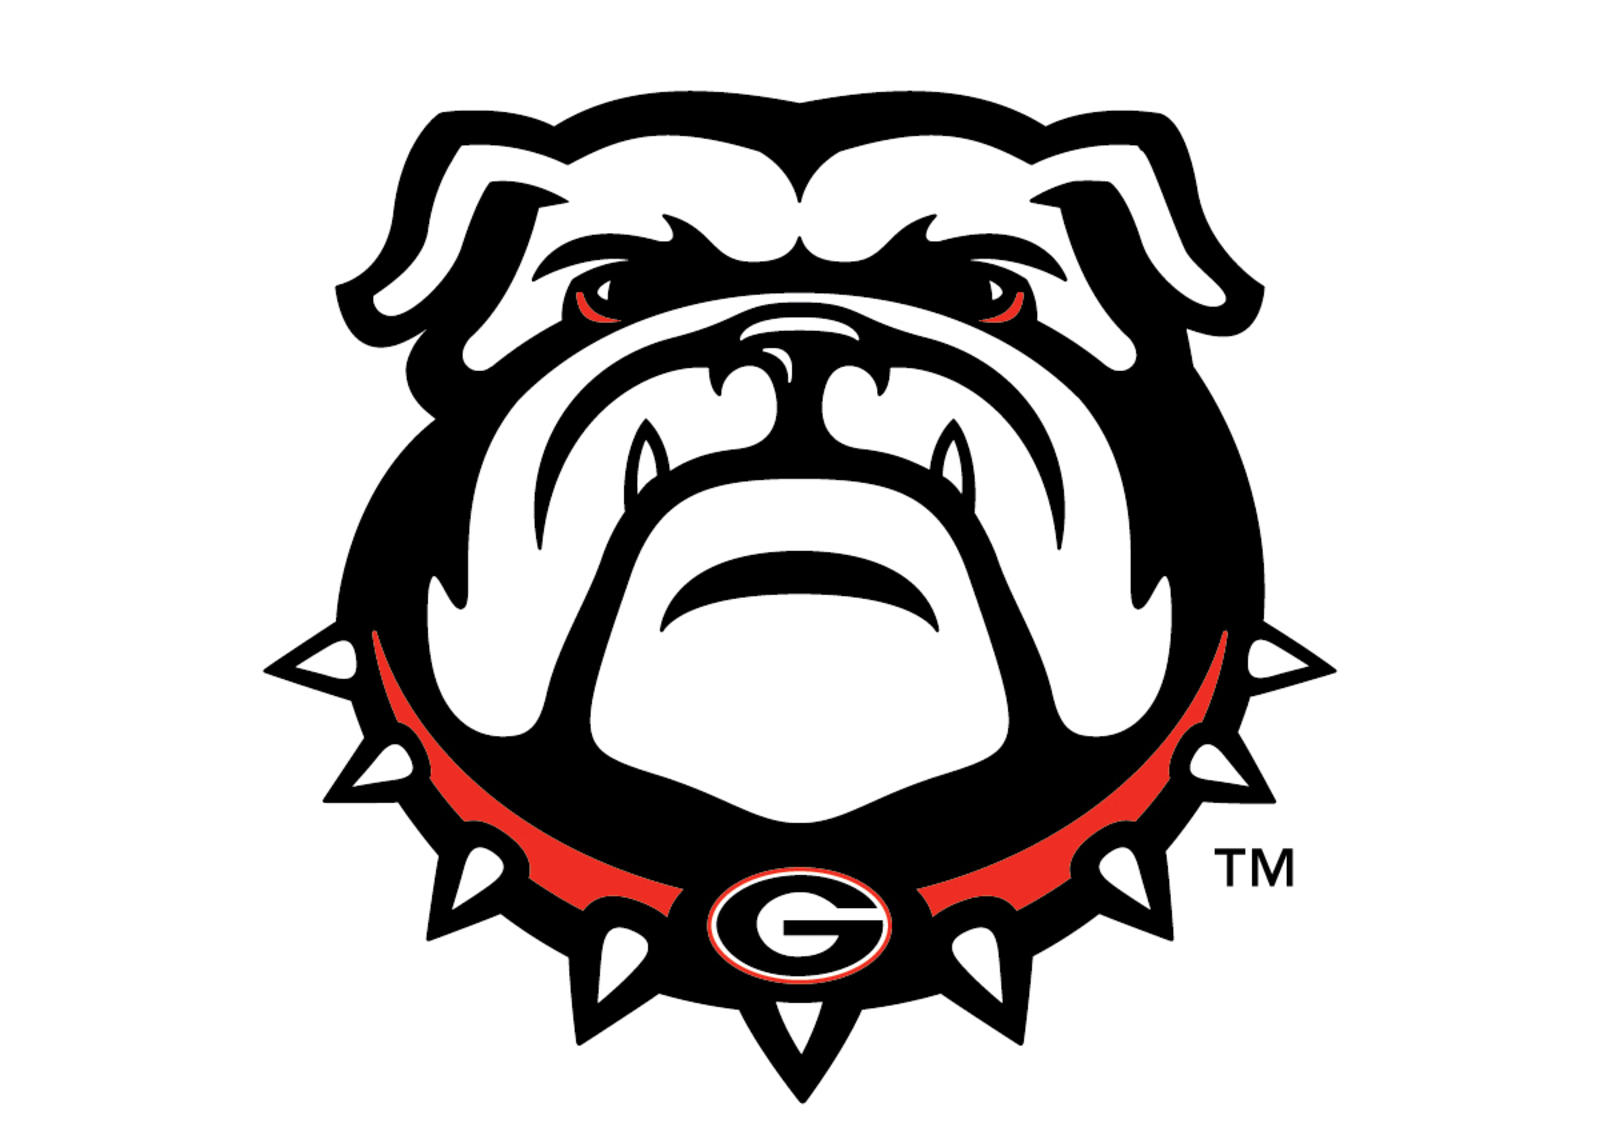 Georgia Bulldogs logo by Fraser Davidson for Nike GIG